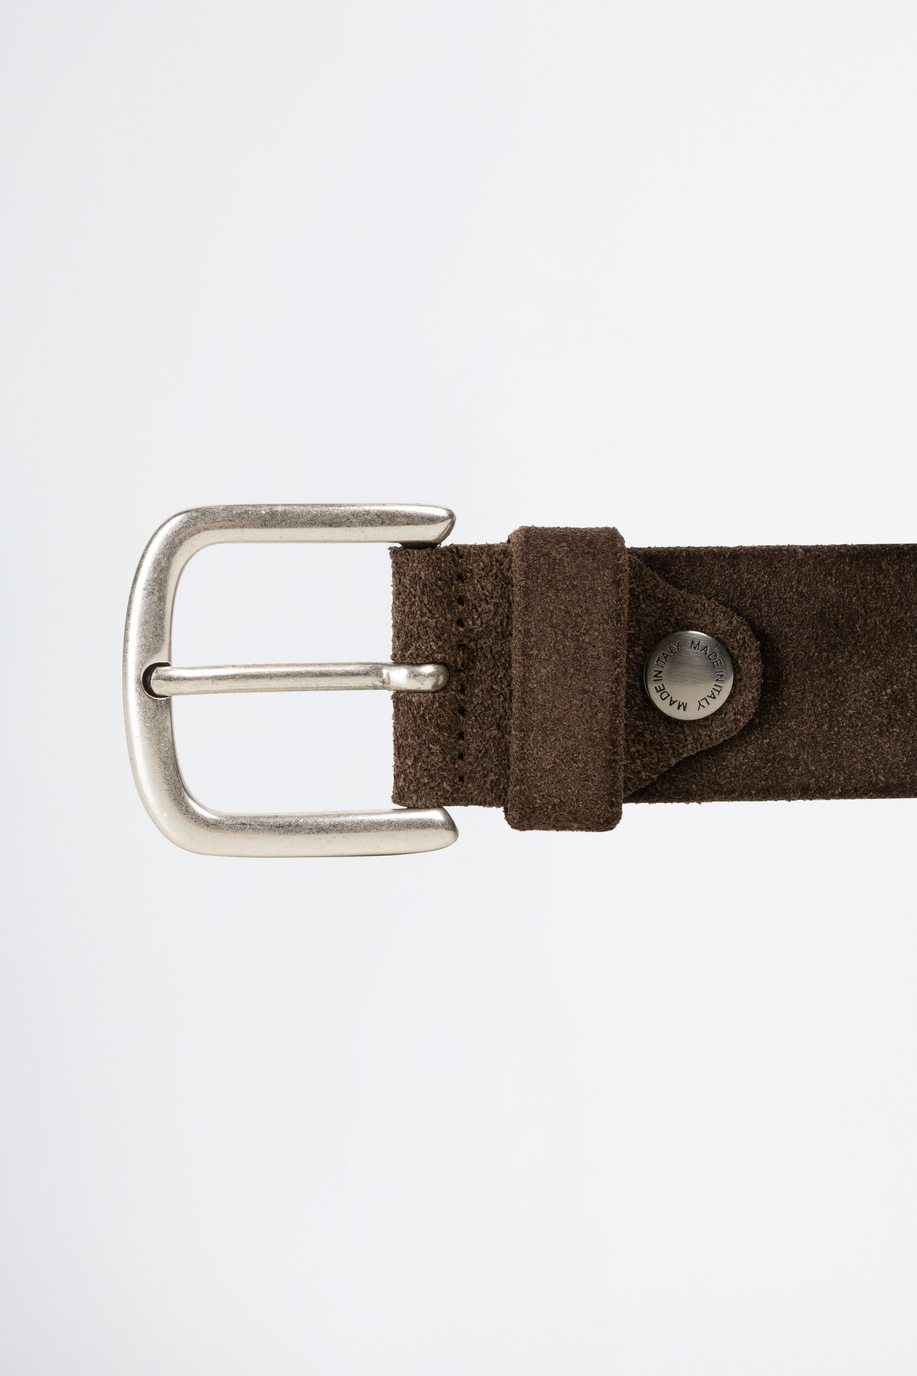 Cintura in pelle di vitello - Look invernali per lui | La Martina - Official Online Shop